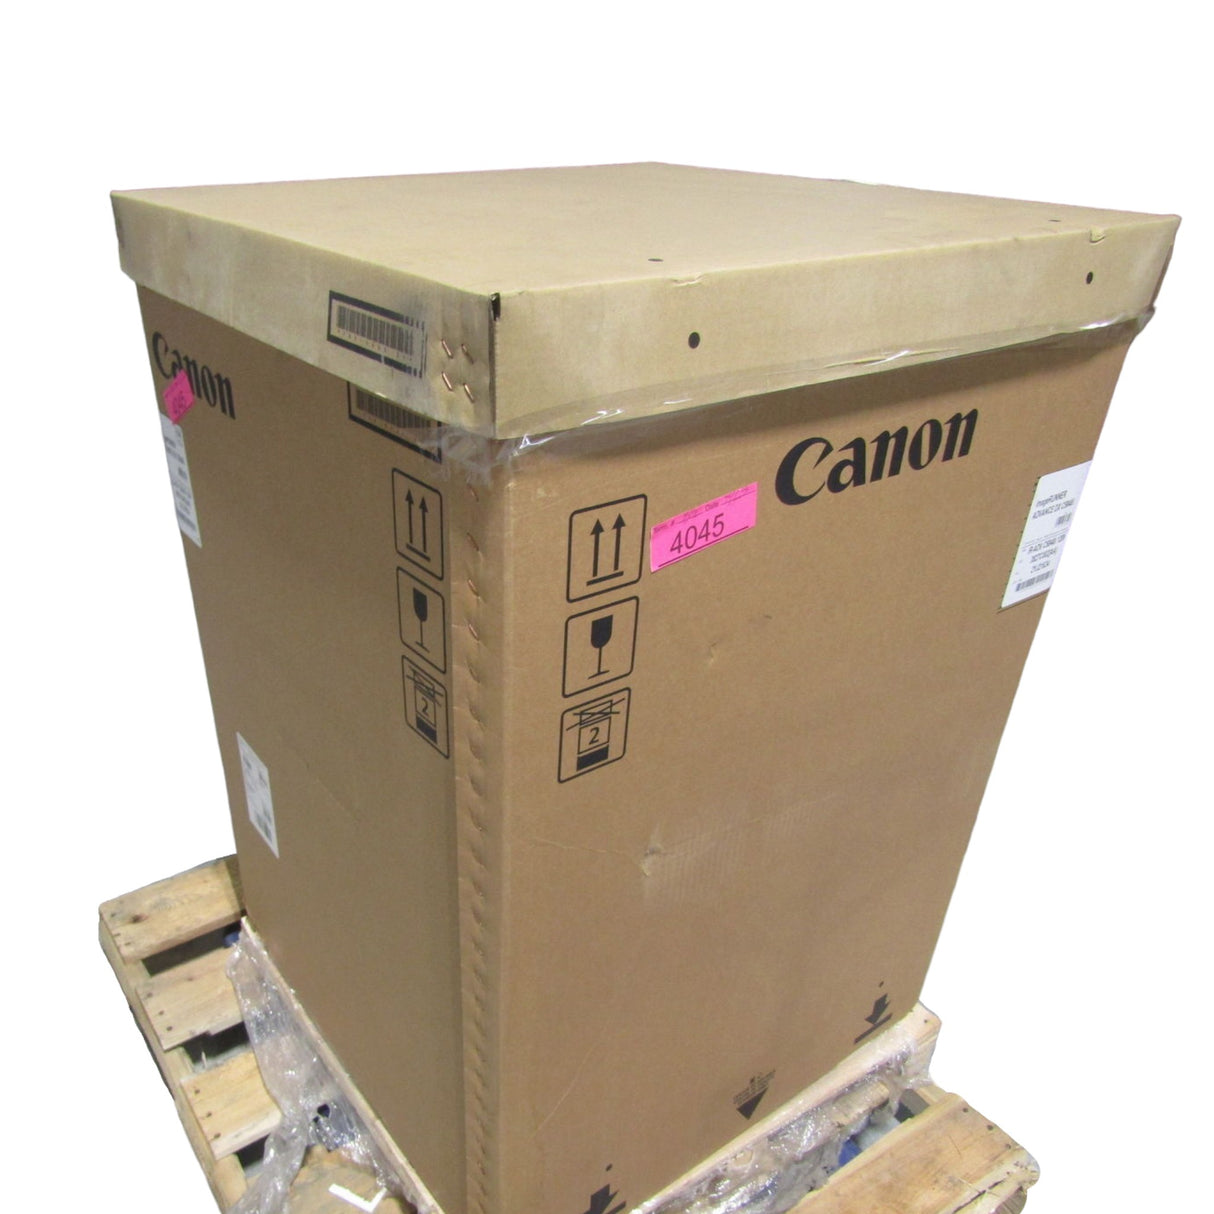 C5840i Genuine Canon ImageRunner Advance DX Multifunction Printer